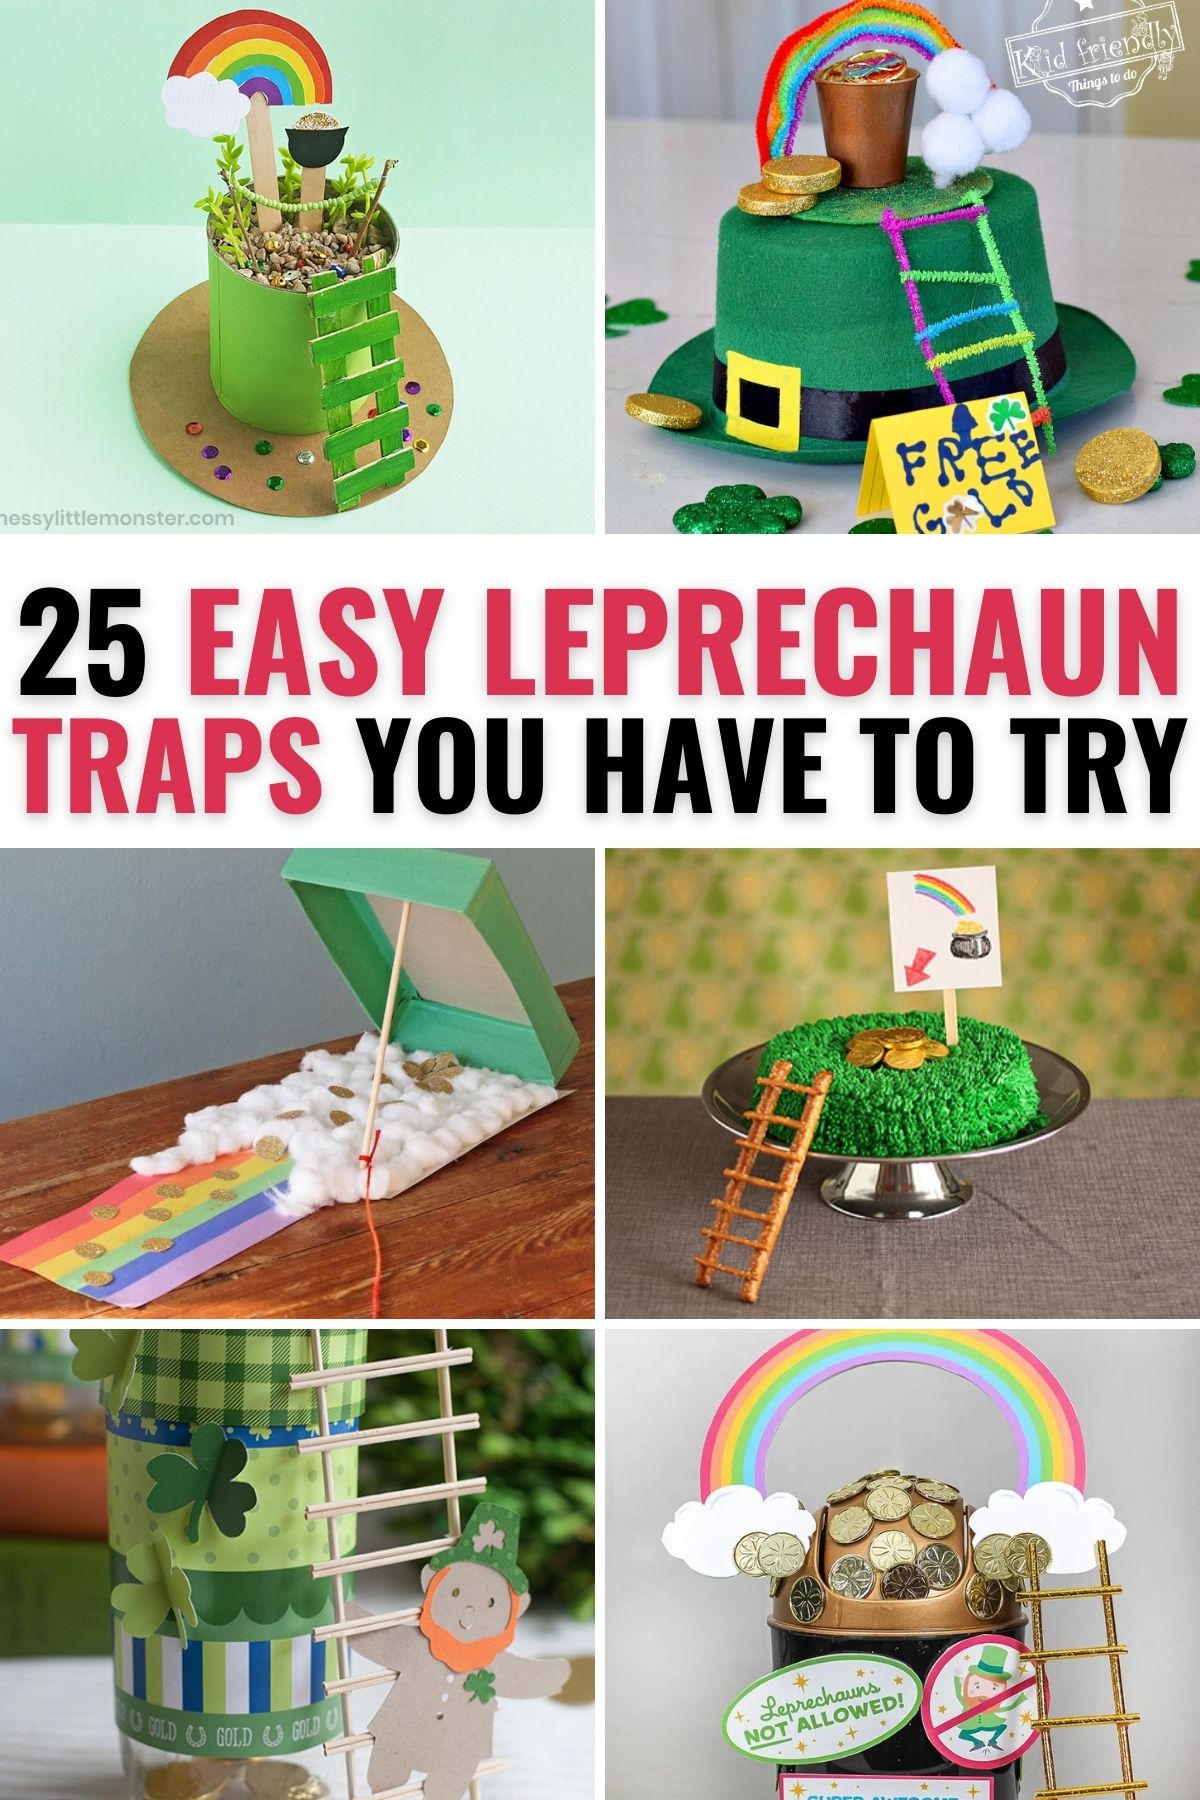 Leprechaun trap ideas kids will love to make